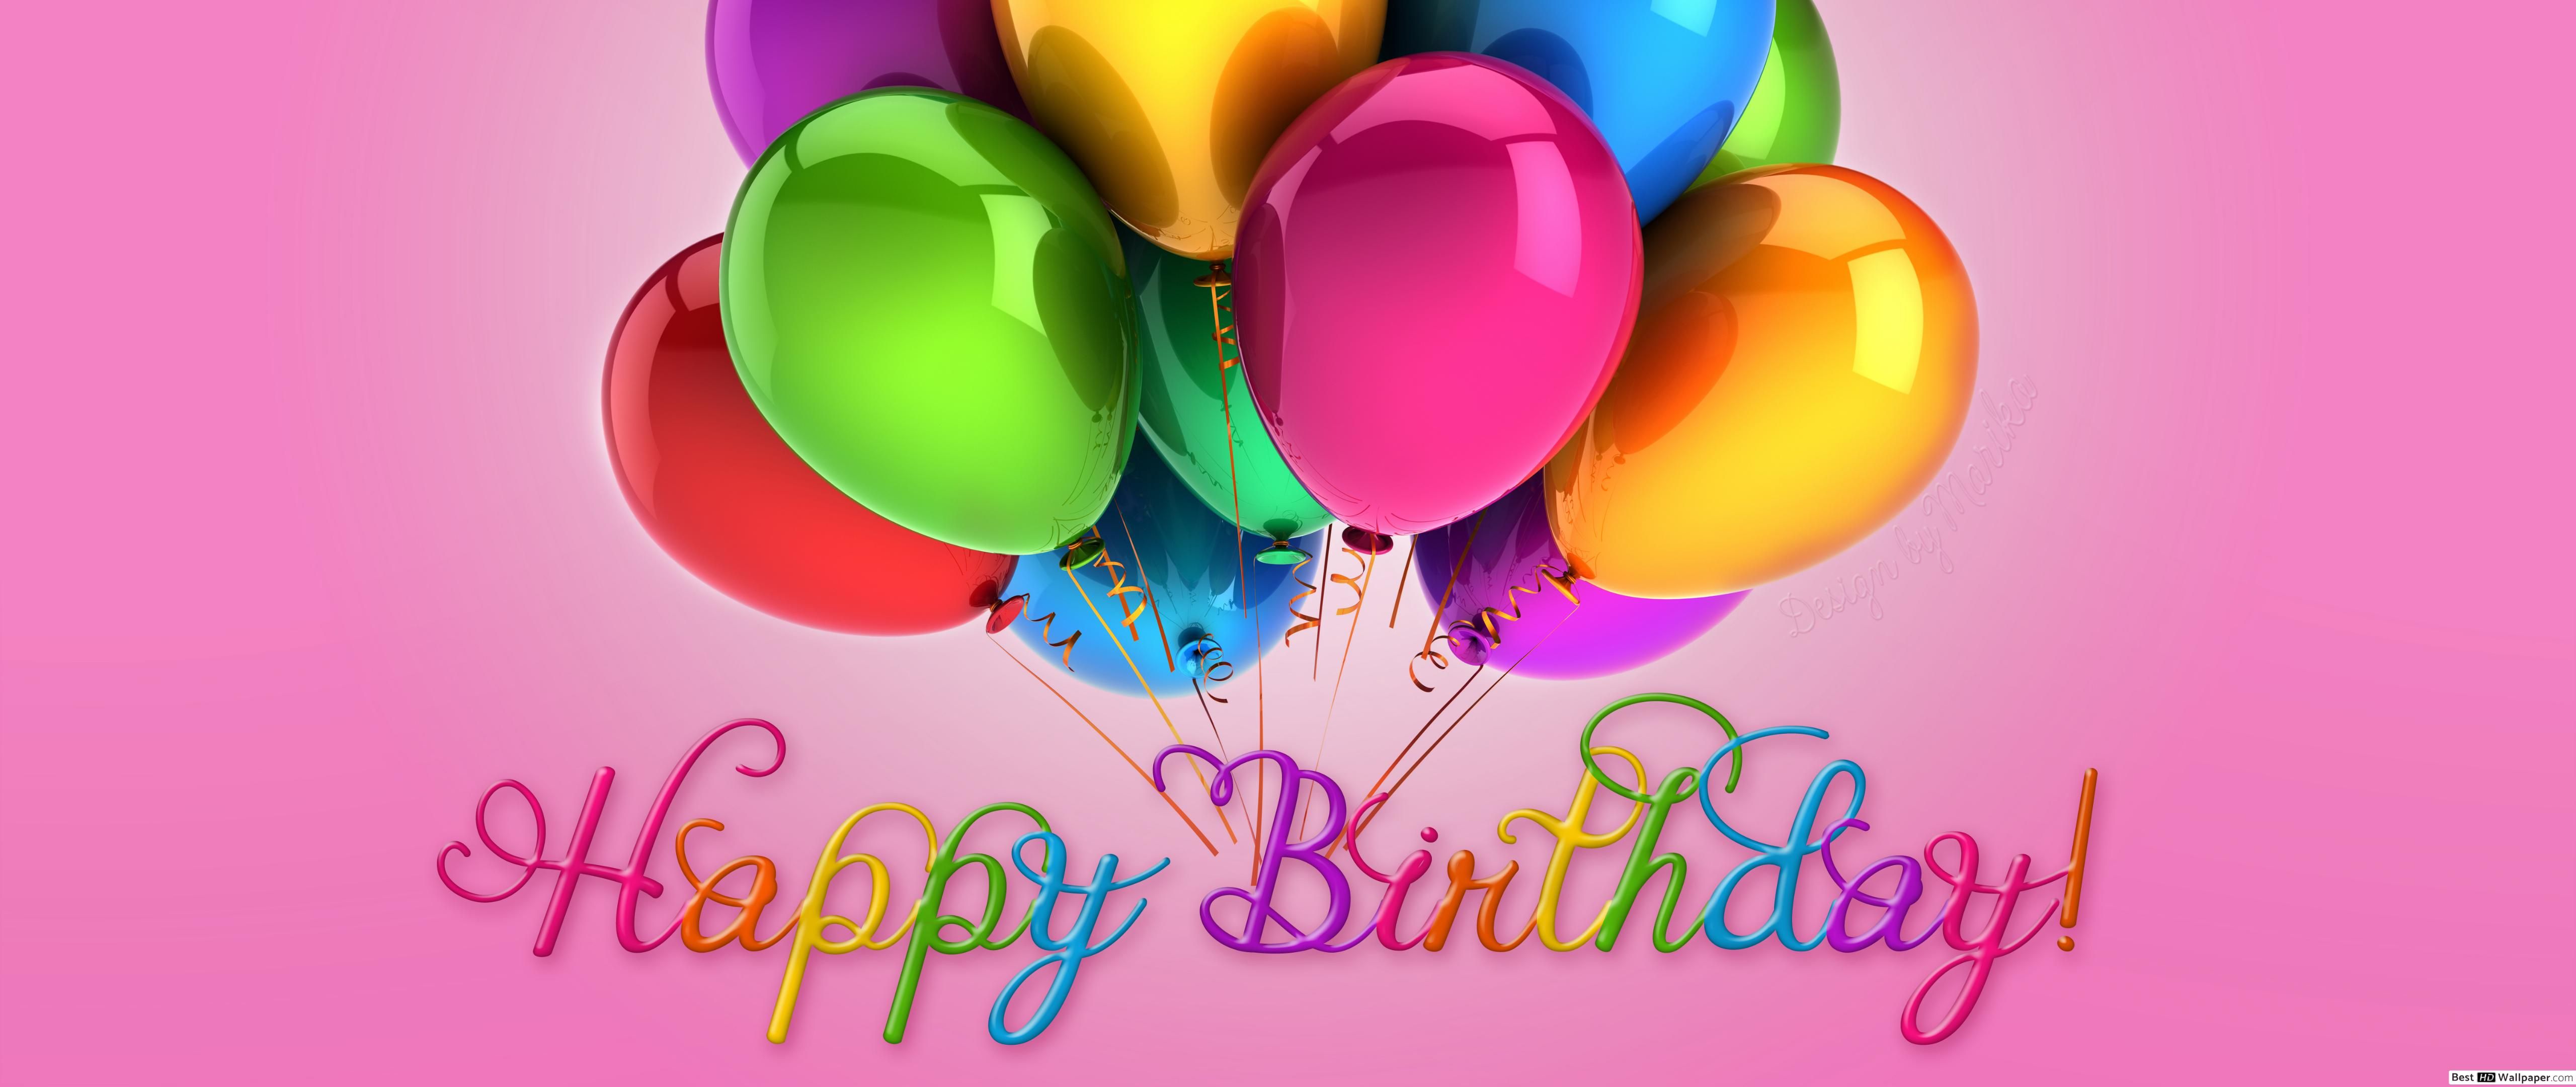 Happy Birthday Balloons HD wallpaper download